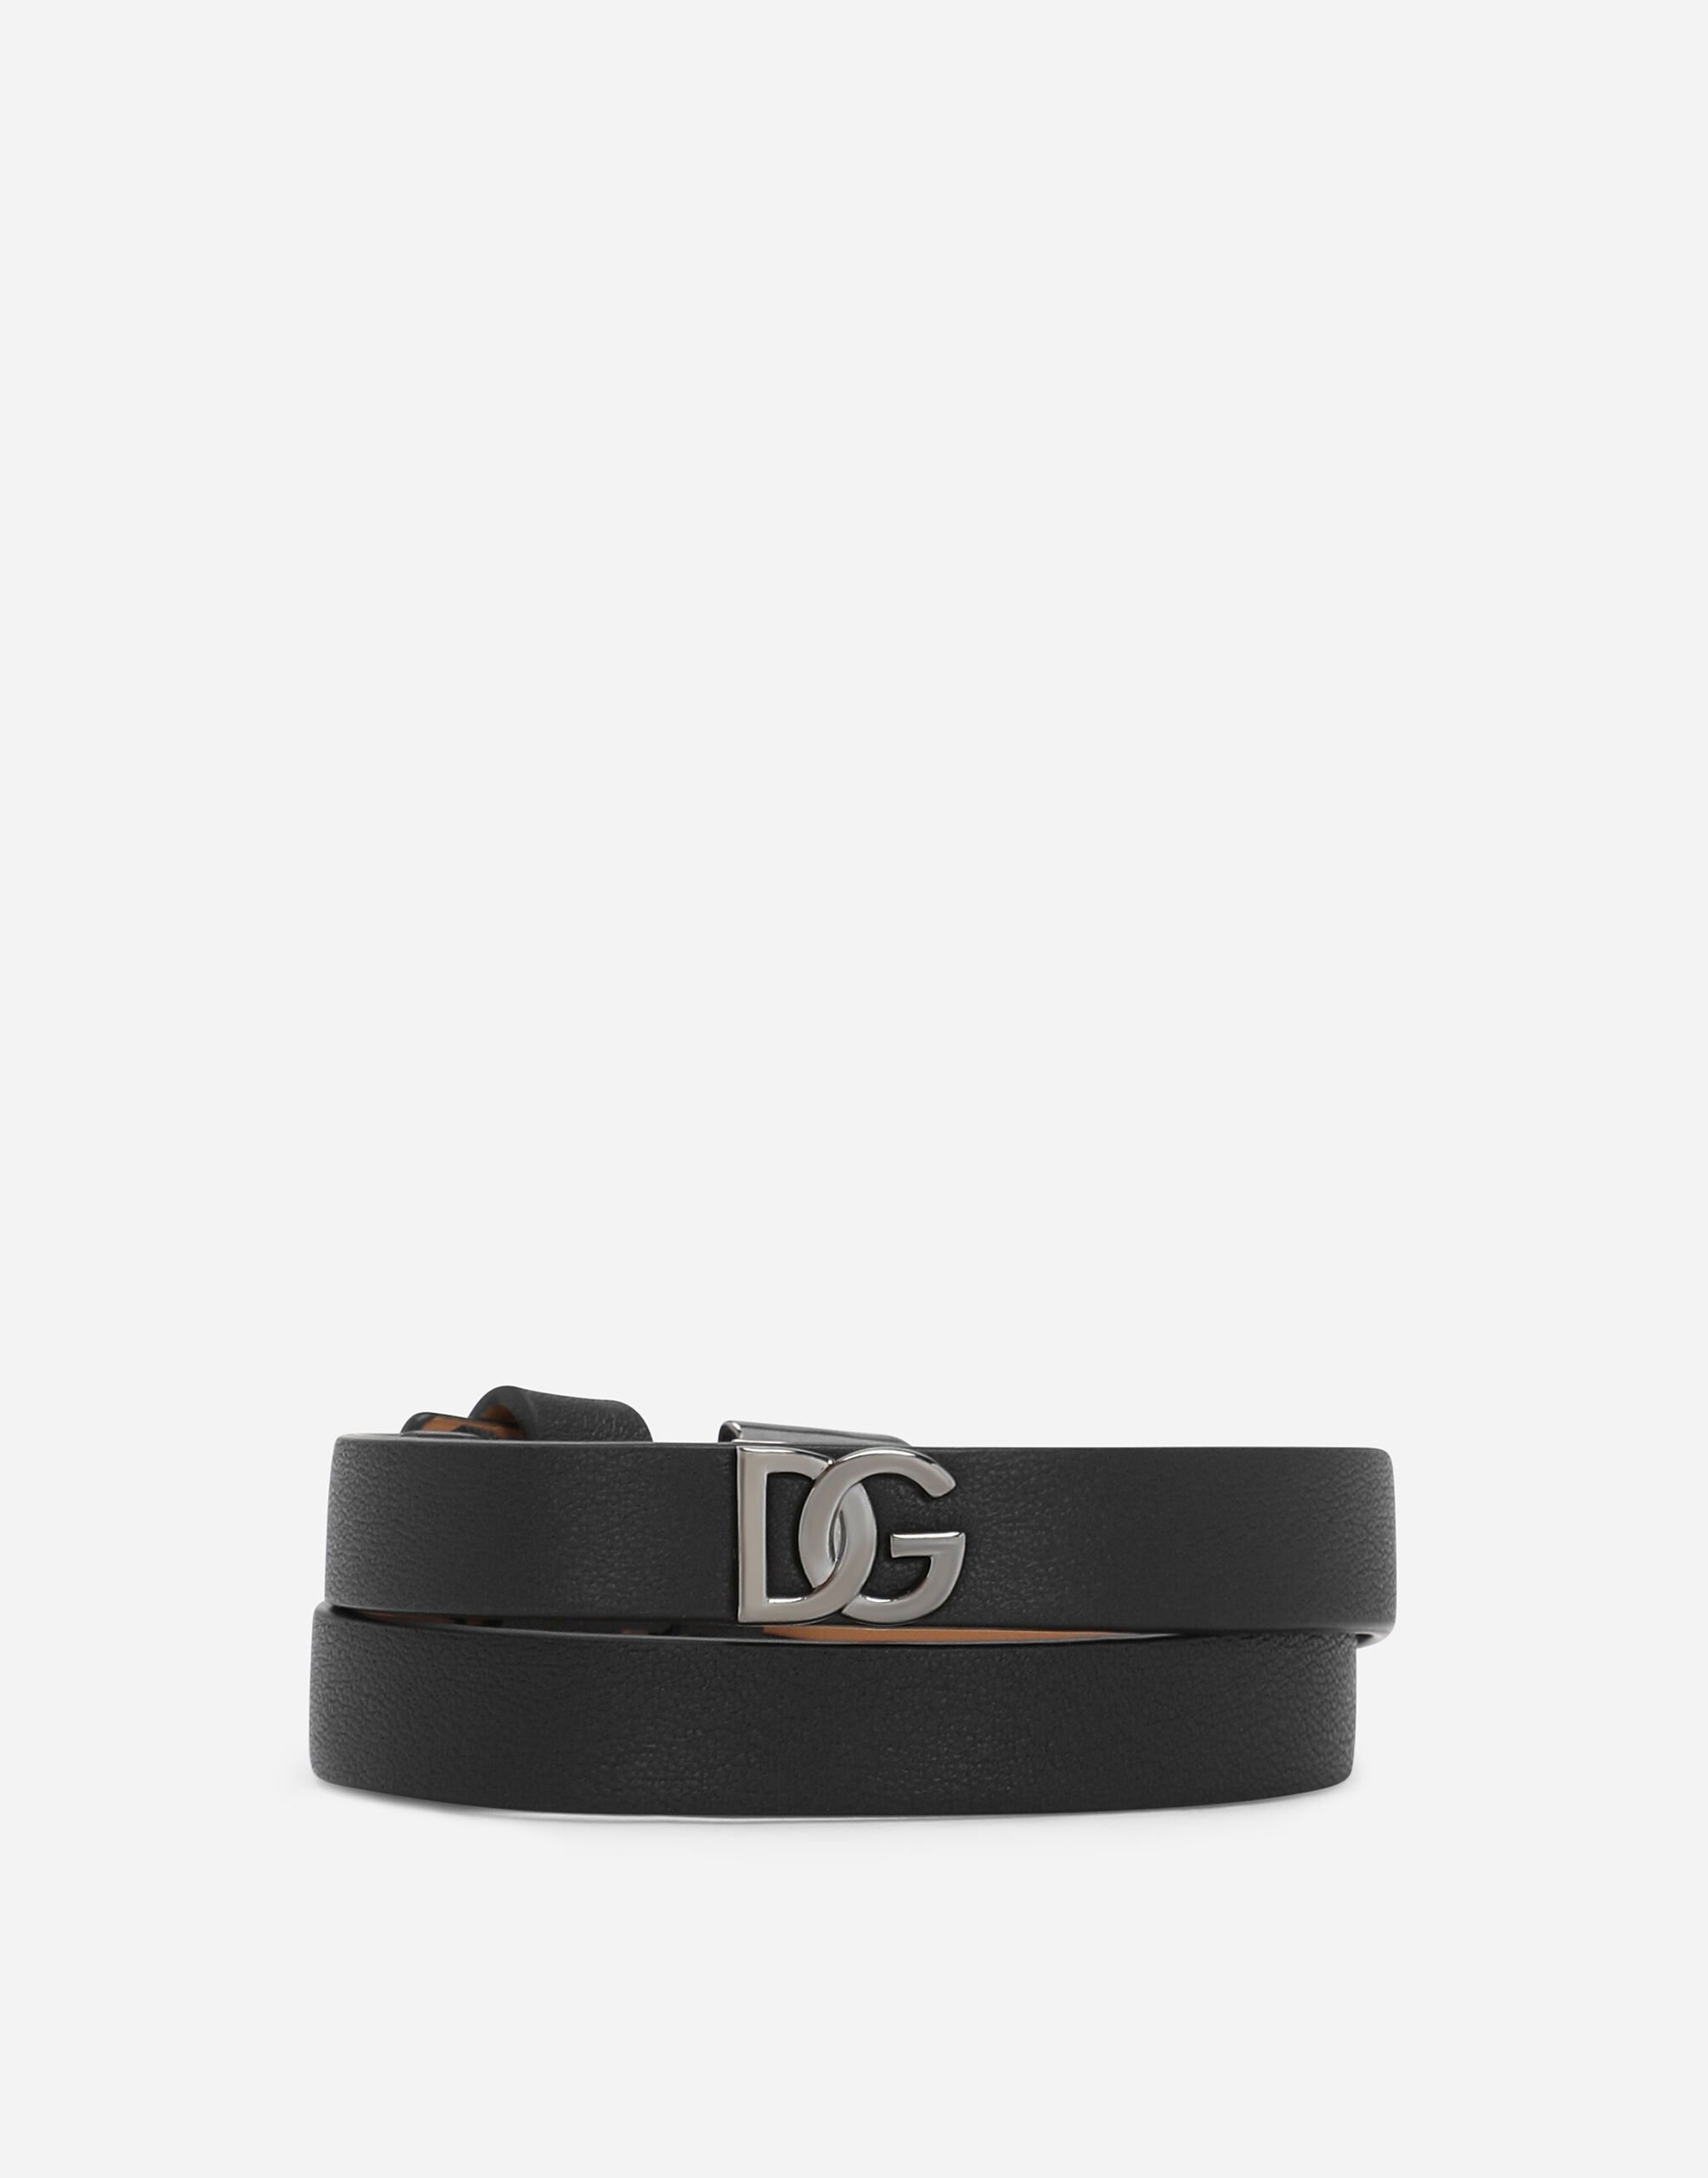 Calfskin bracelet with DG logo - 1